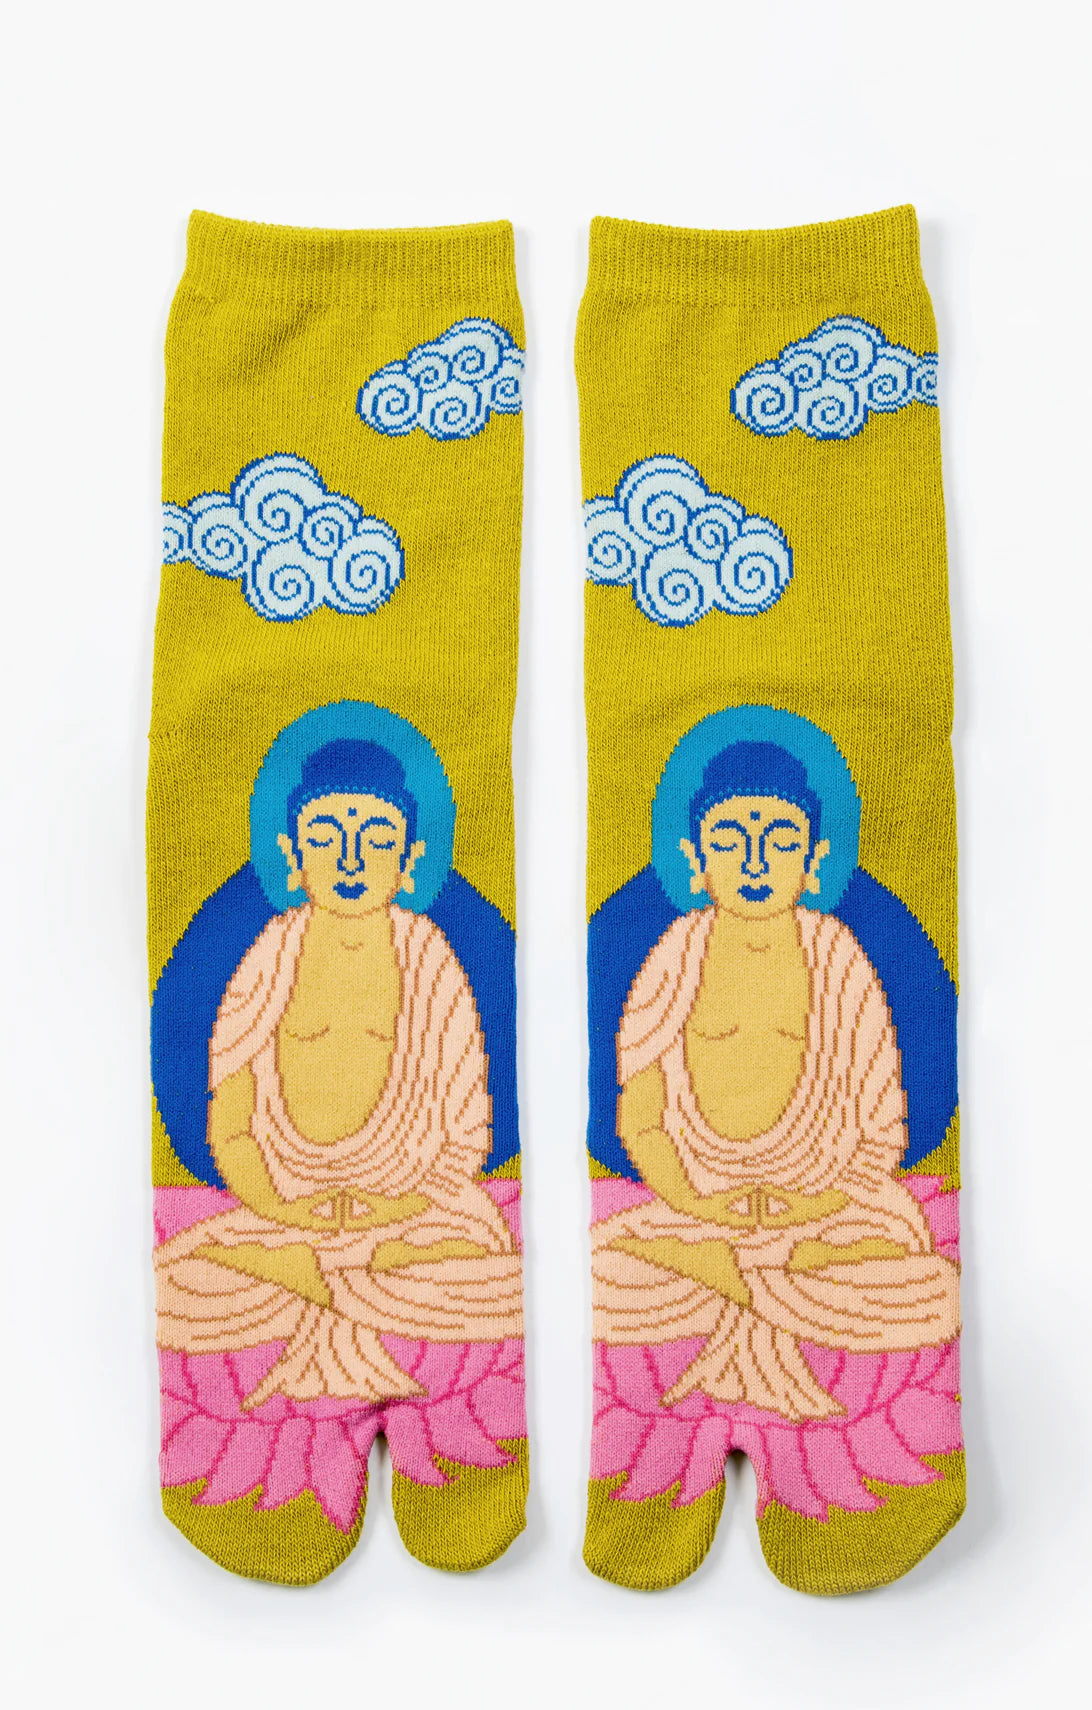 This is a picture of NINJA SOCKS product name Buddha Tabi Toe Socks Yellow